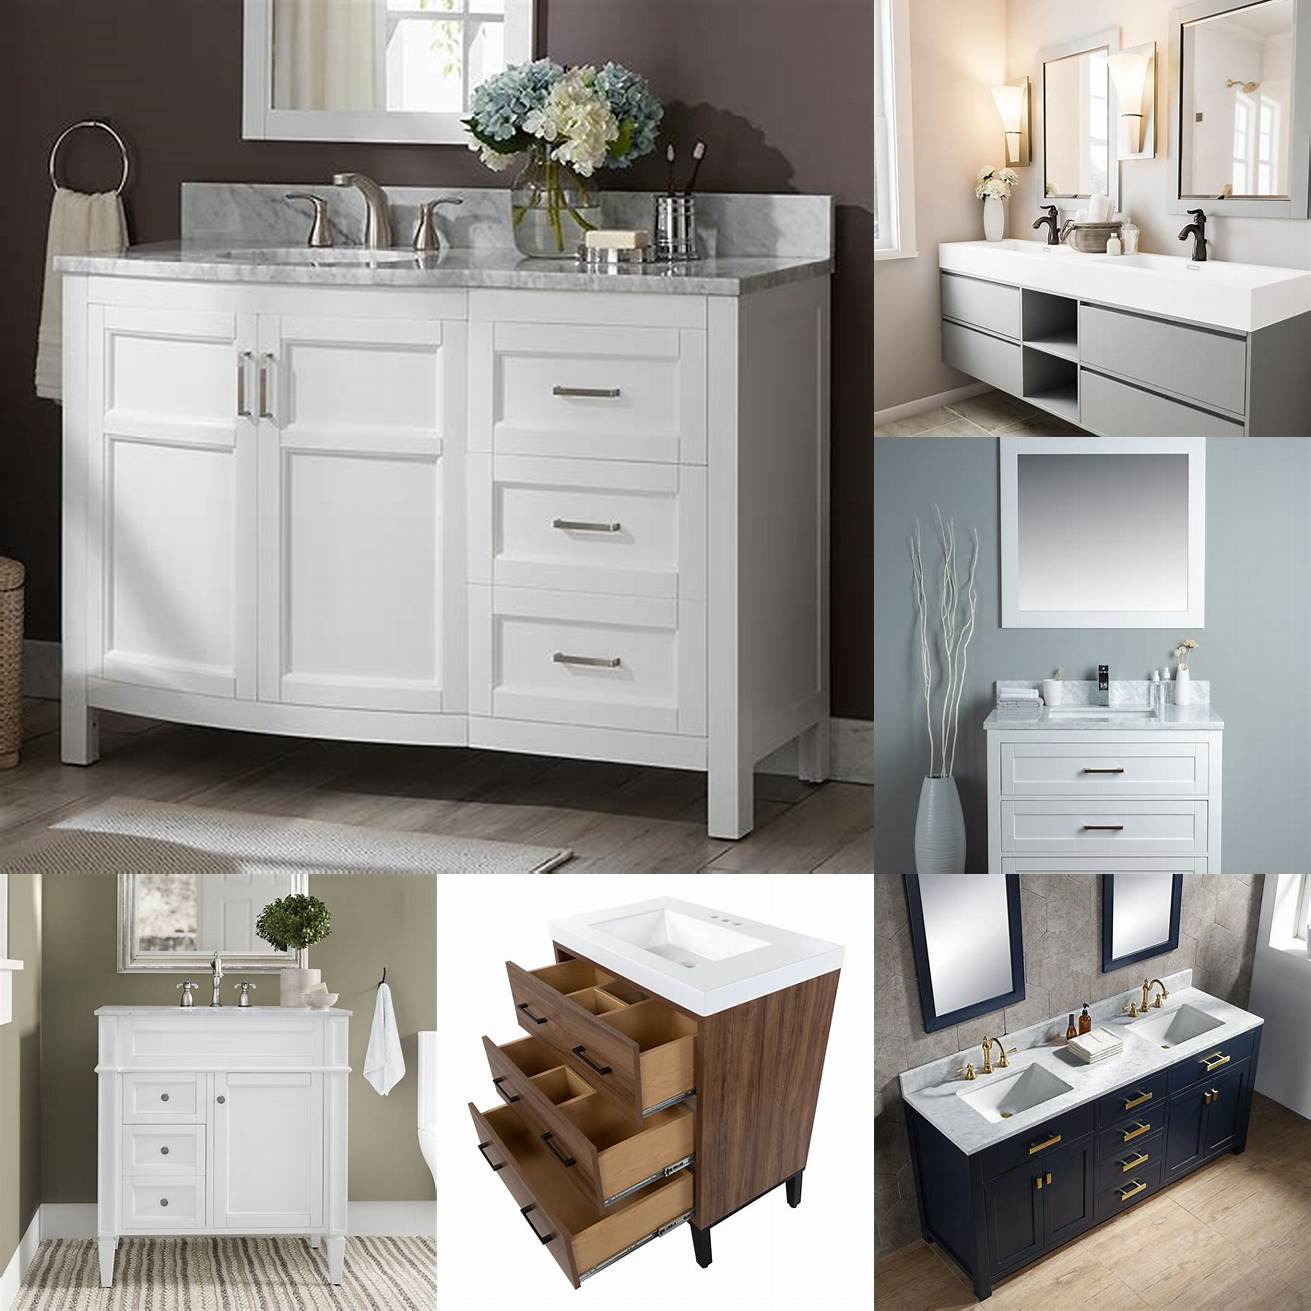 Choosing a vanity with drawers